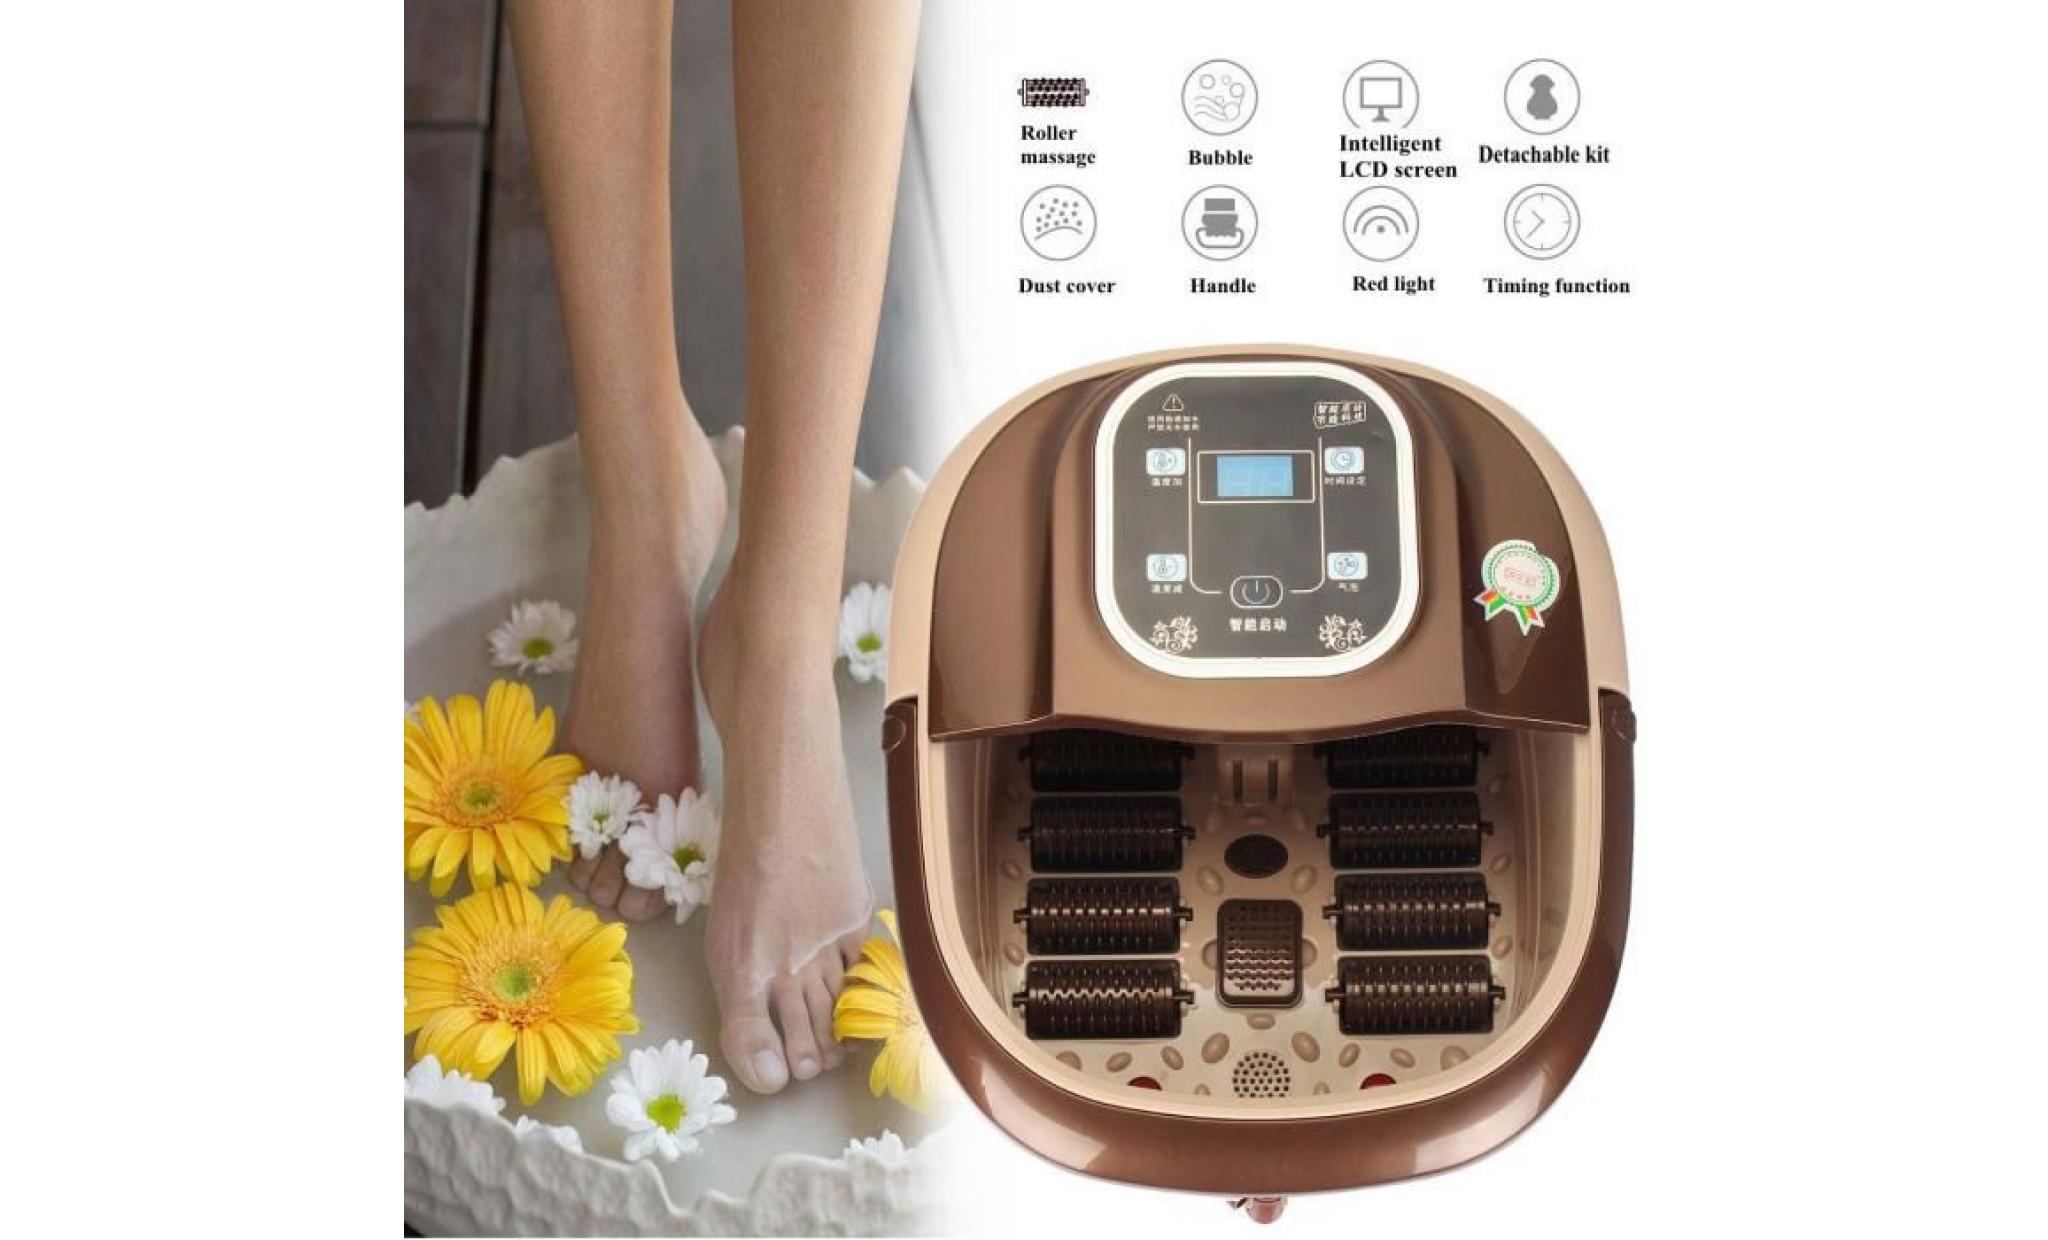 massage spa des pieds bain relaxant masseur chauffant 220v lcd digital smart pas cher